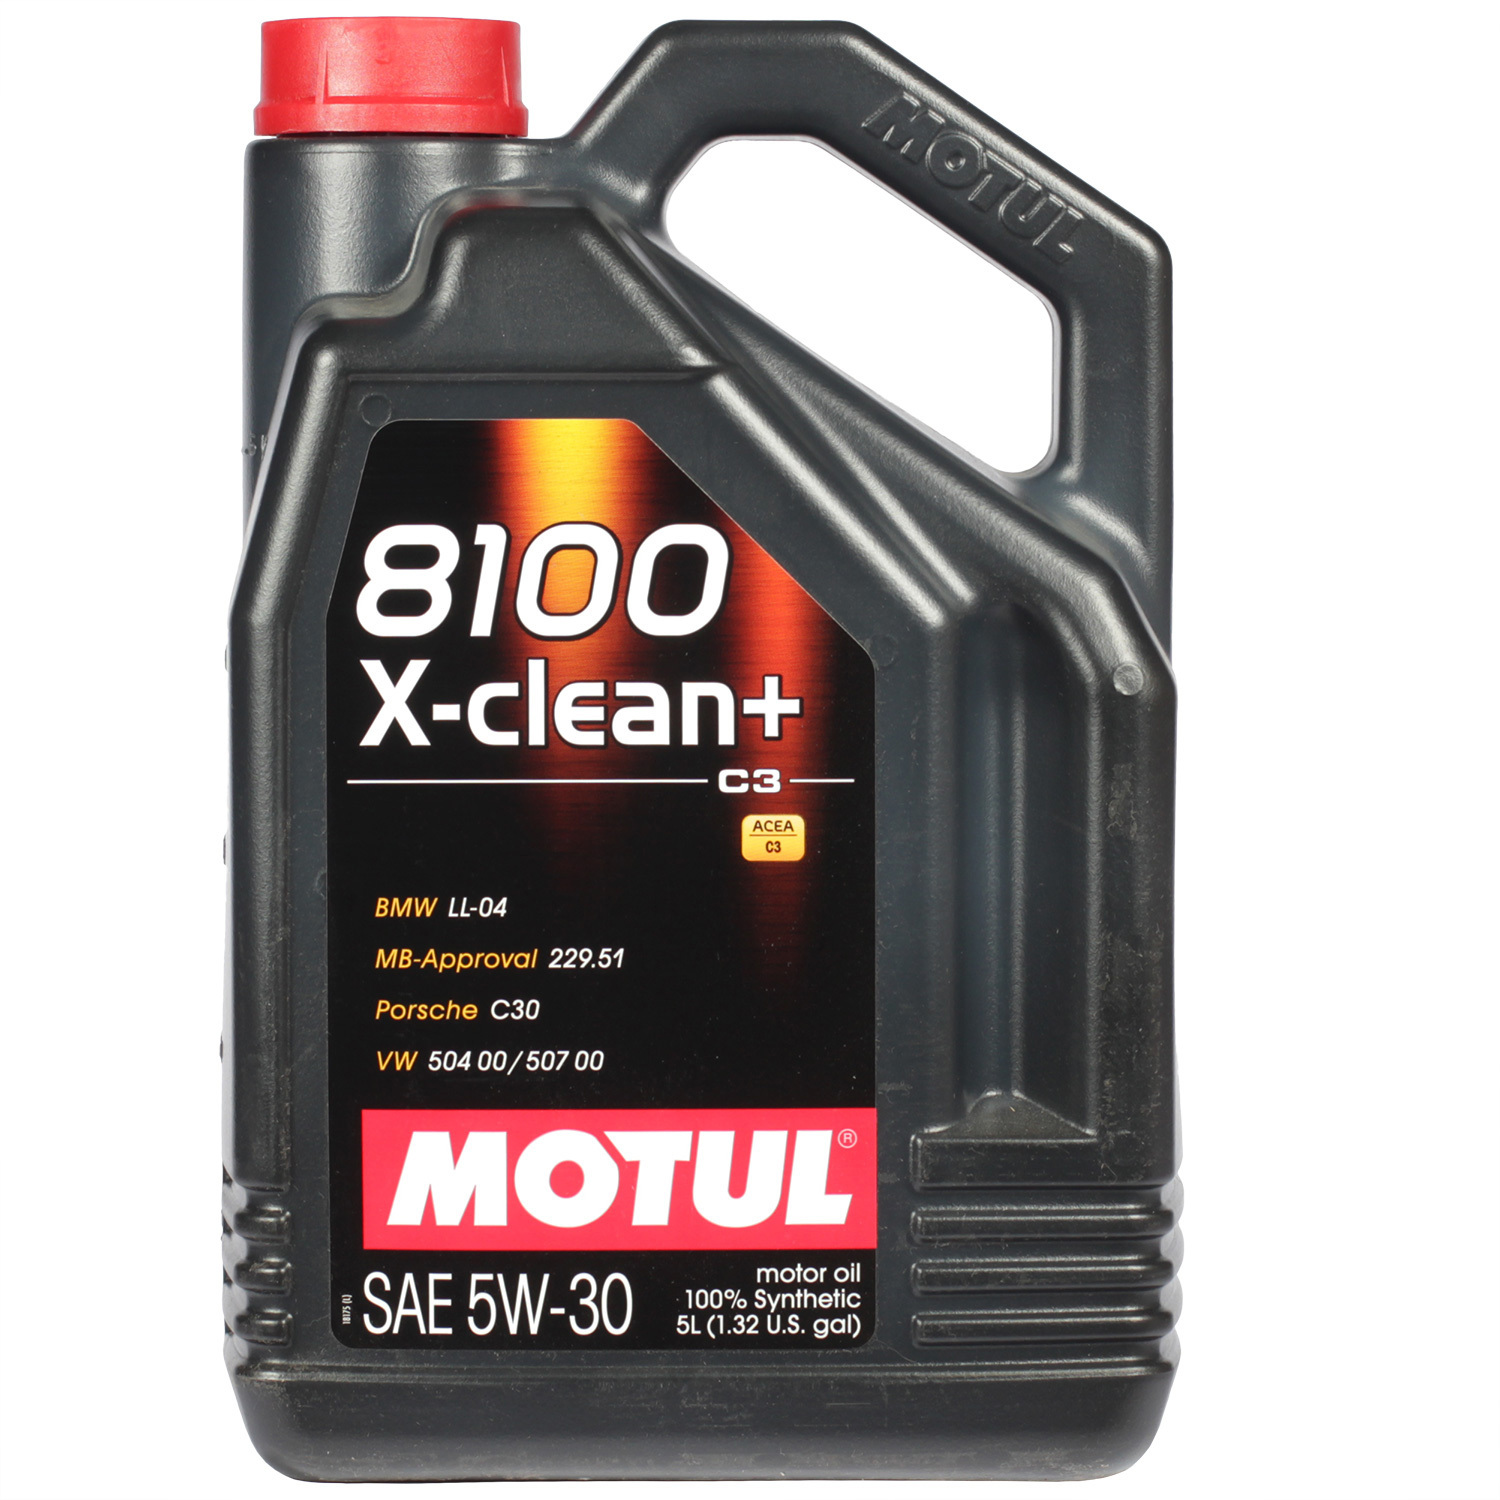 Motul Моторное масло Motul 8100 X-clean+ 5W-30, 5 л